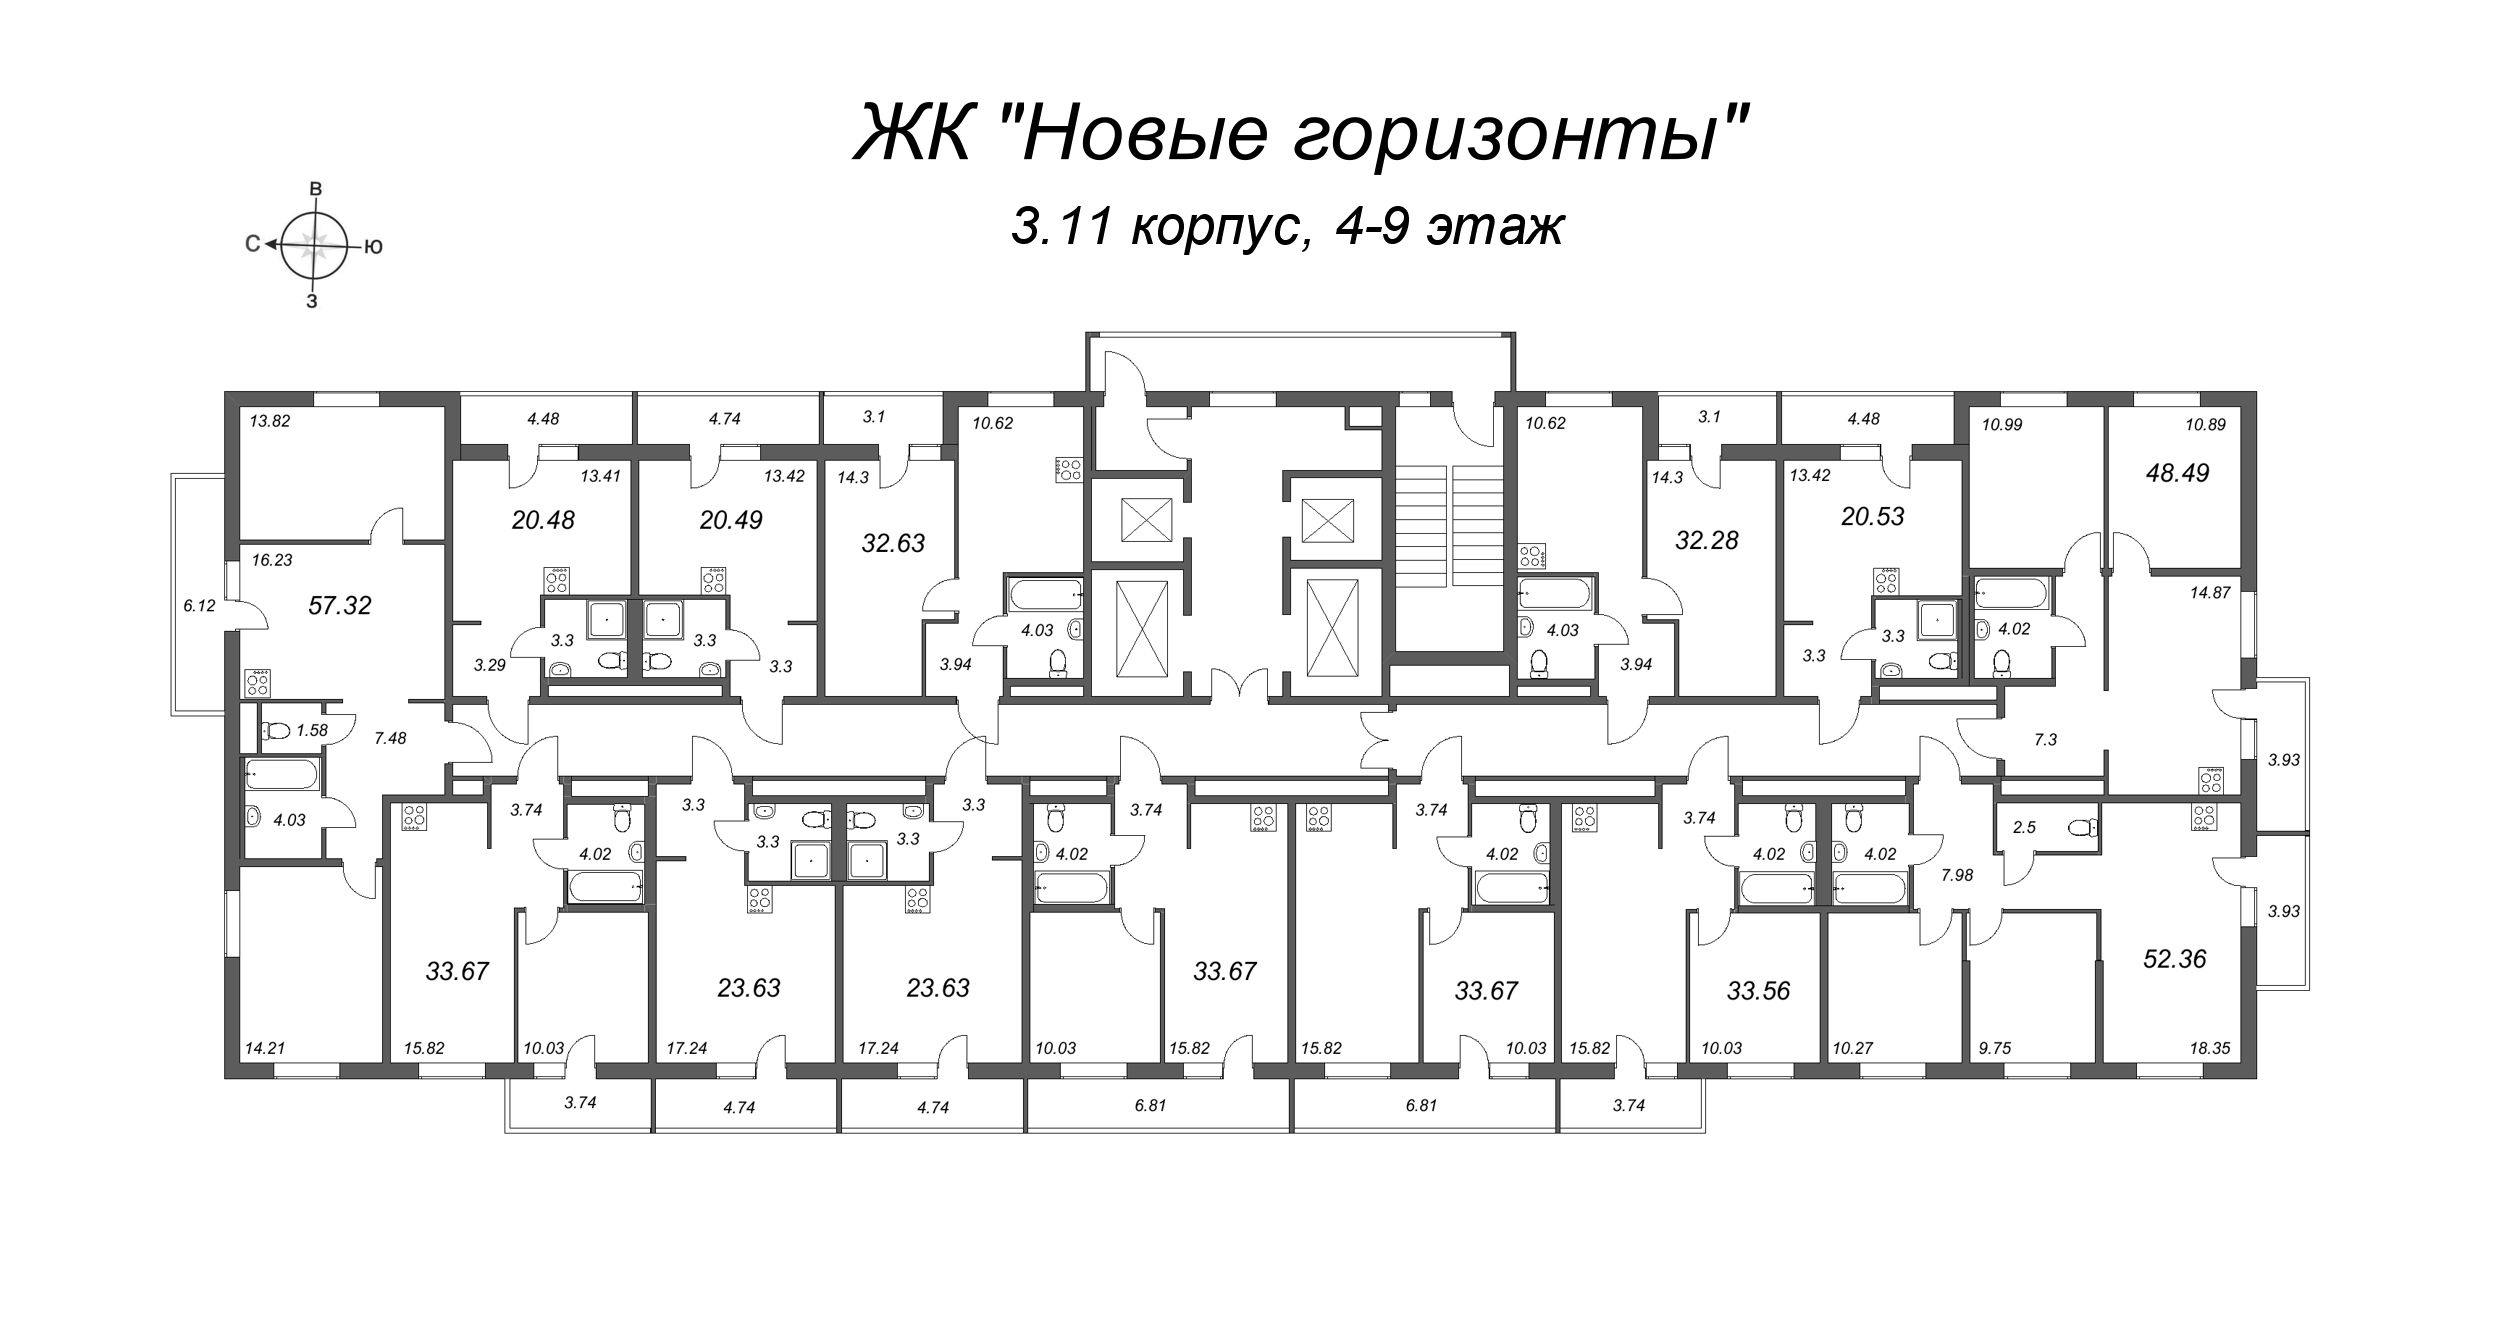 3-комнатная (Евро) квартира, 52.36 м² - планировка этажа